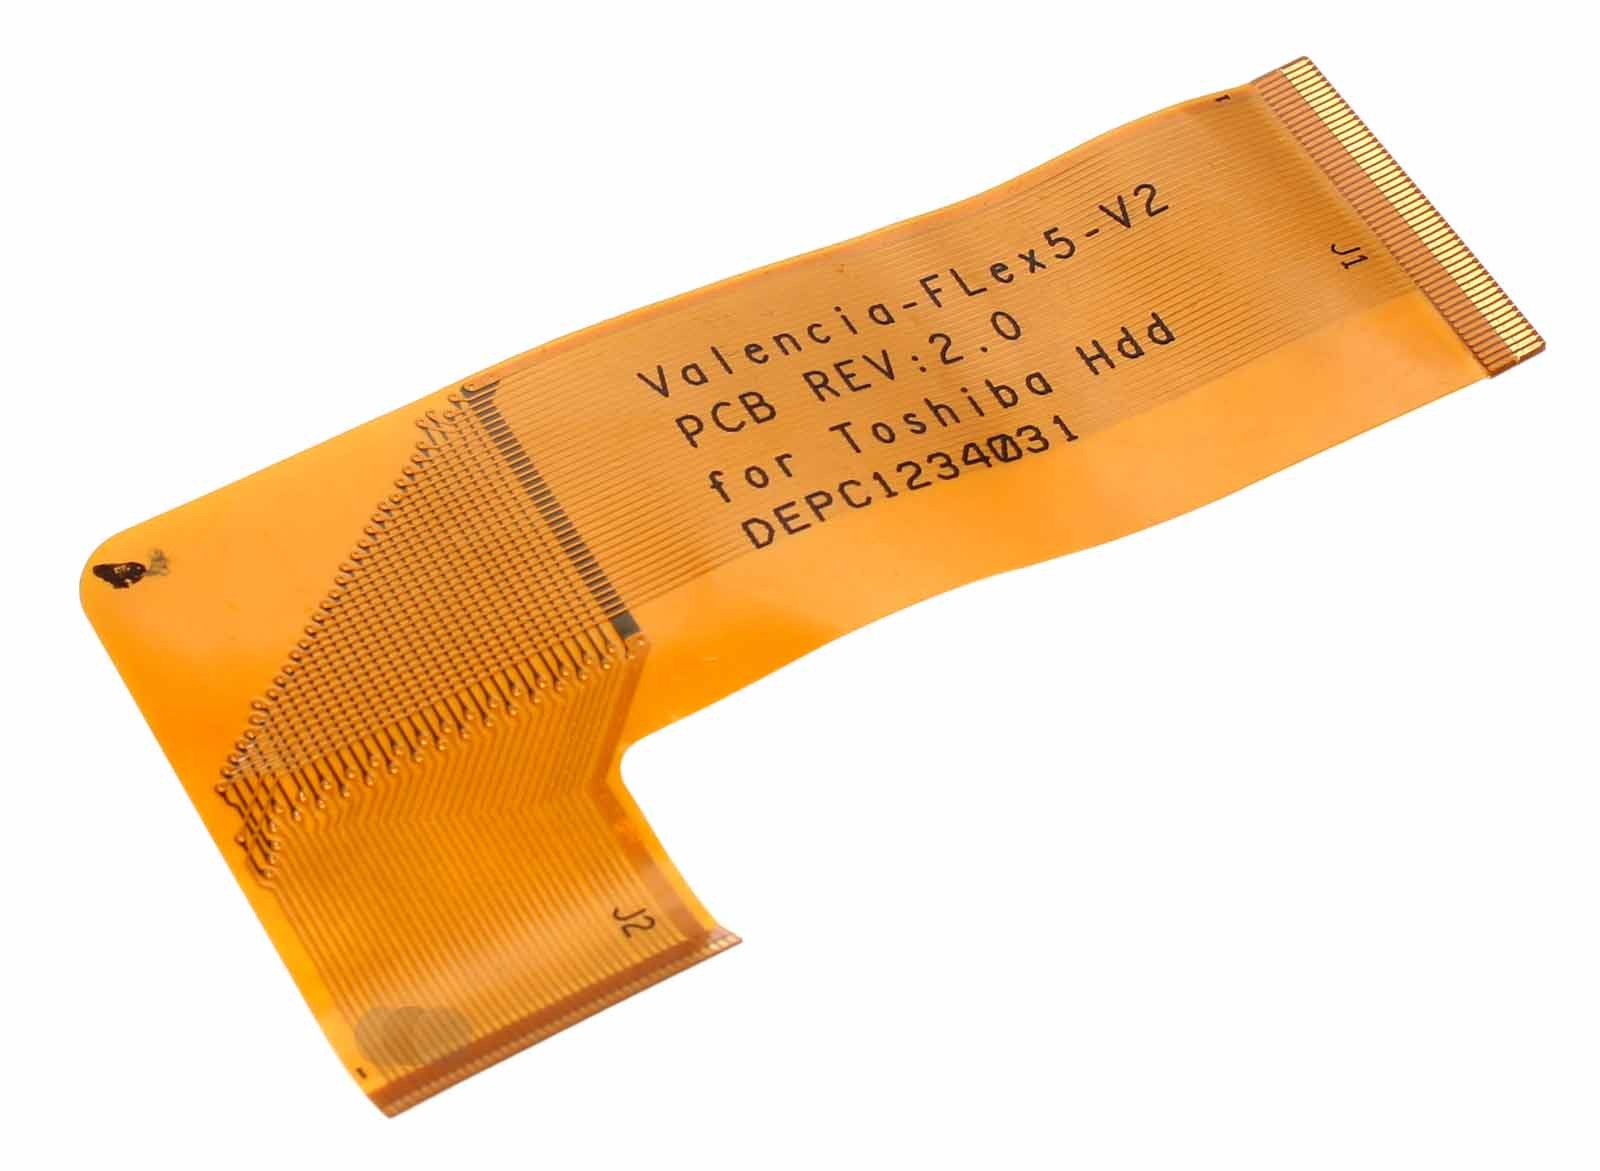 Gebrauchtes Hdd Flex Kabel für TomTom GO 910 Navi, Valencia-Flex5-V2 PCB Rev: 2.0 for toshiba hdd DEPC1234031